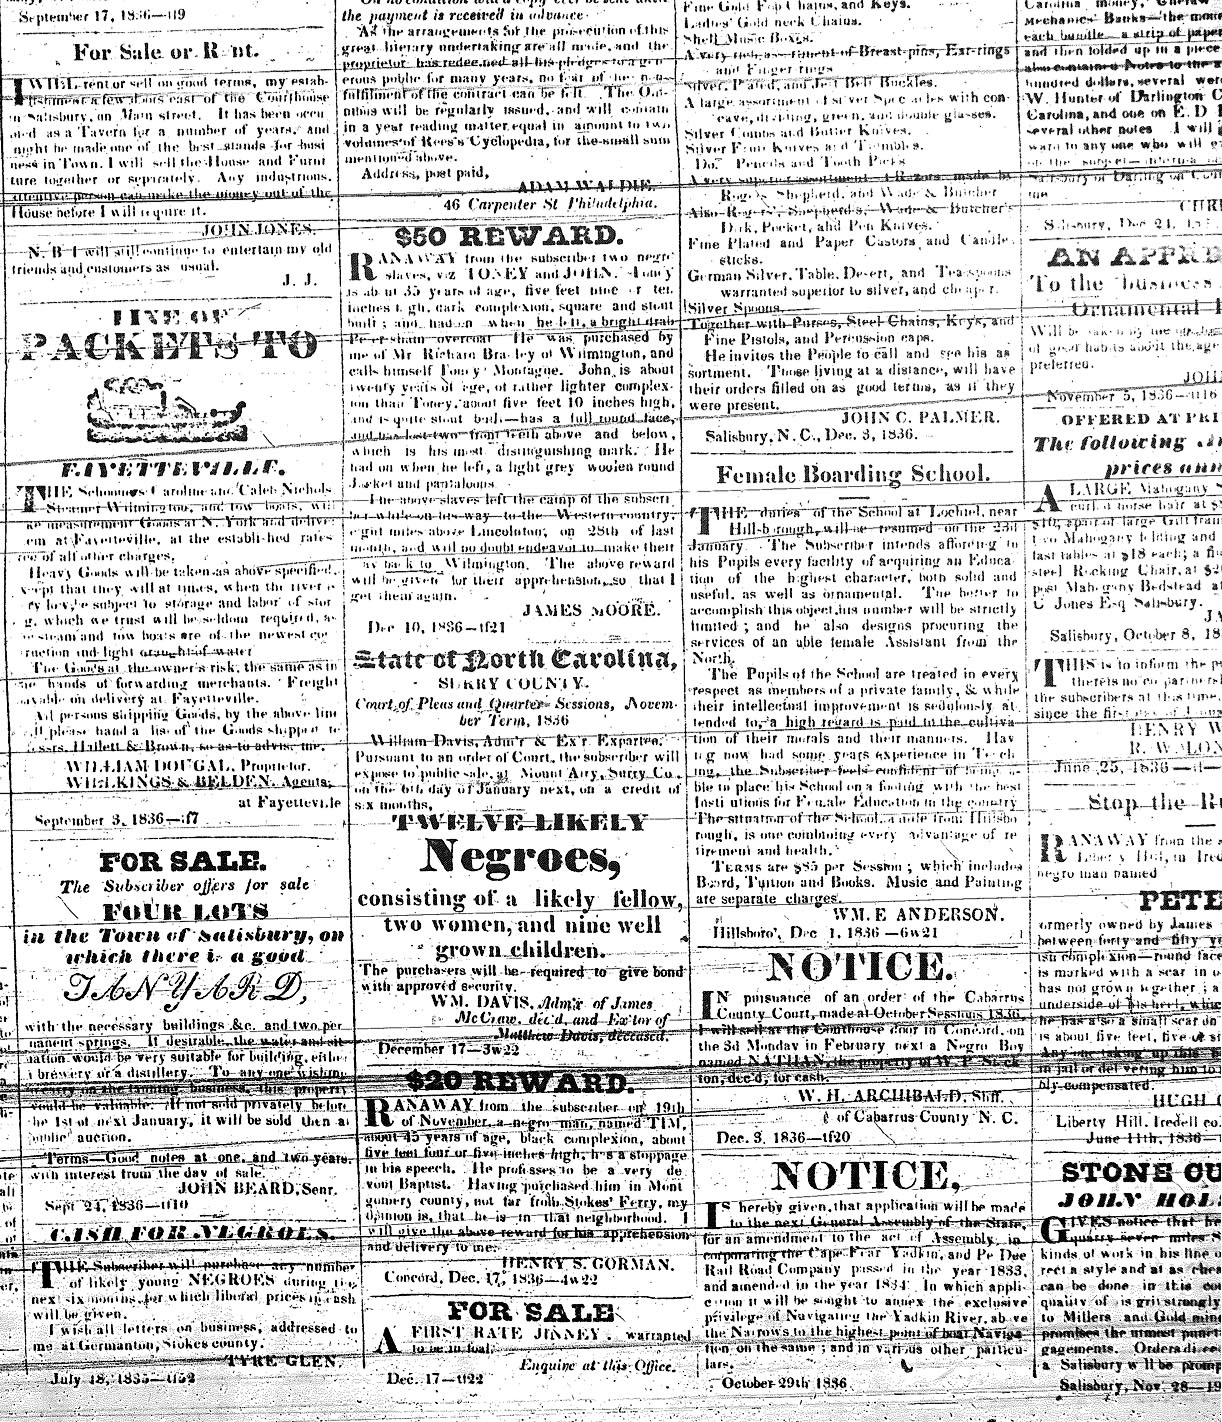 Carolina Watchman Slave ads: January 7, 1837